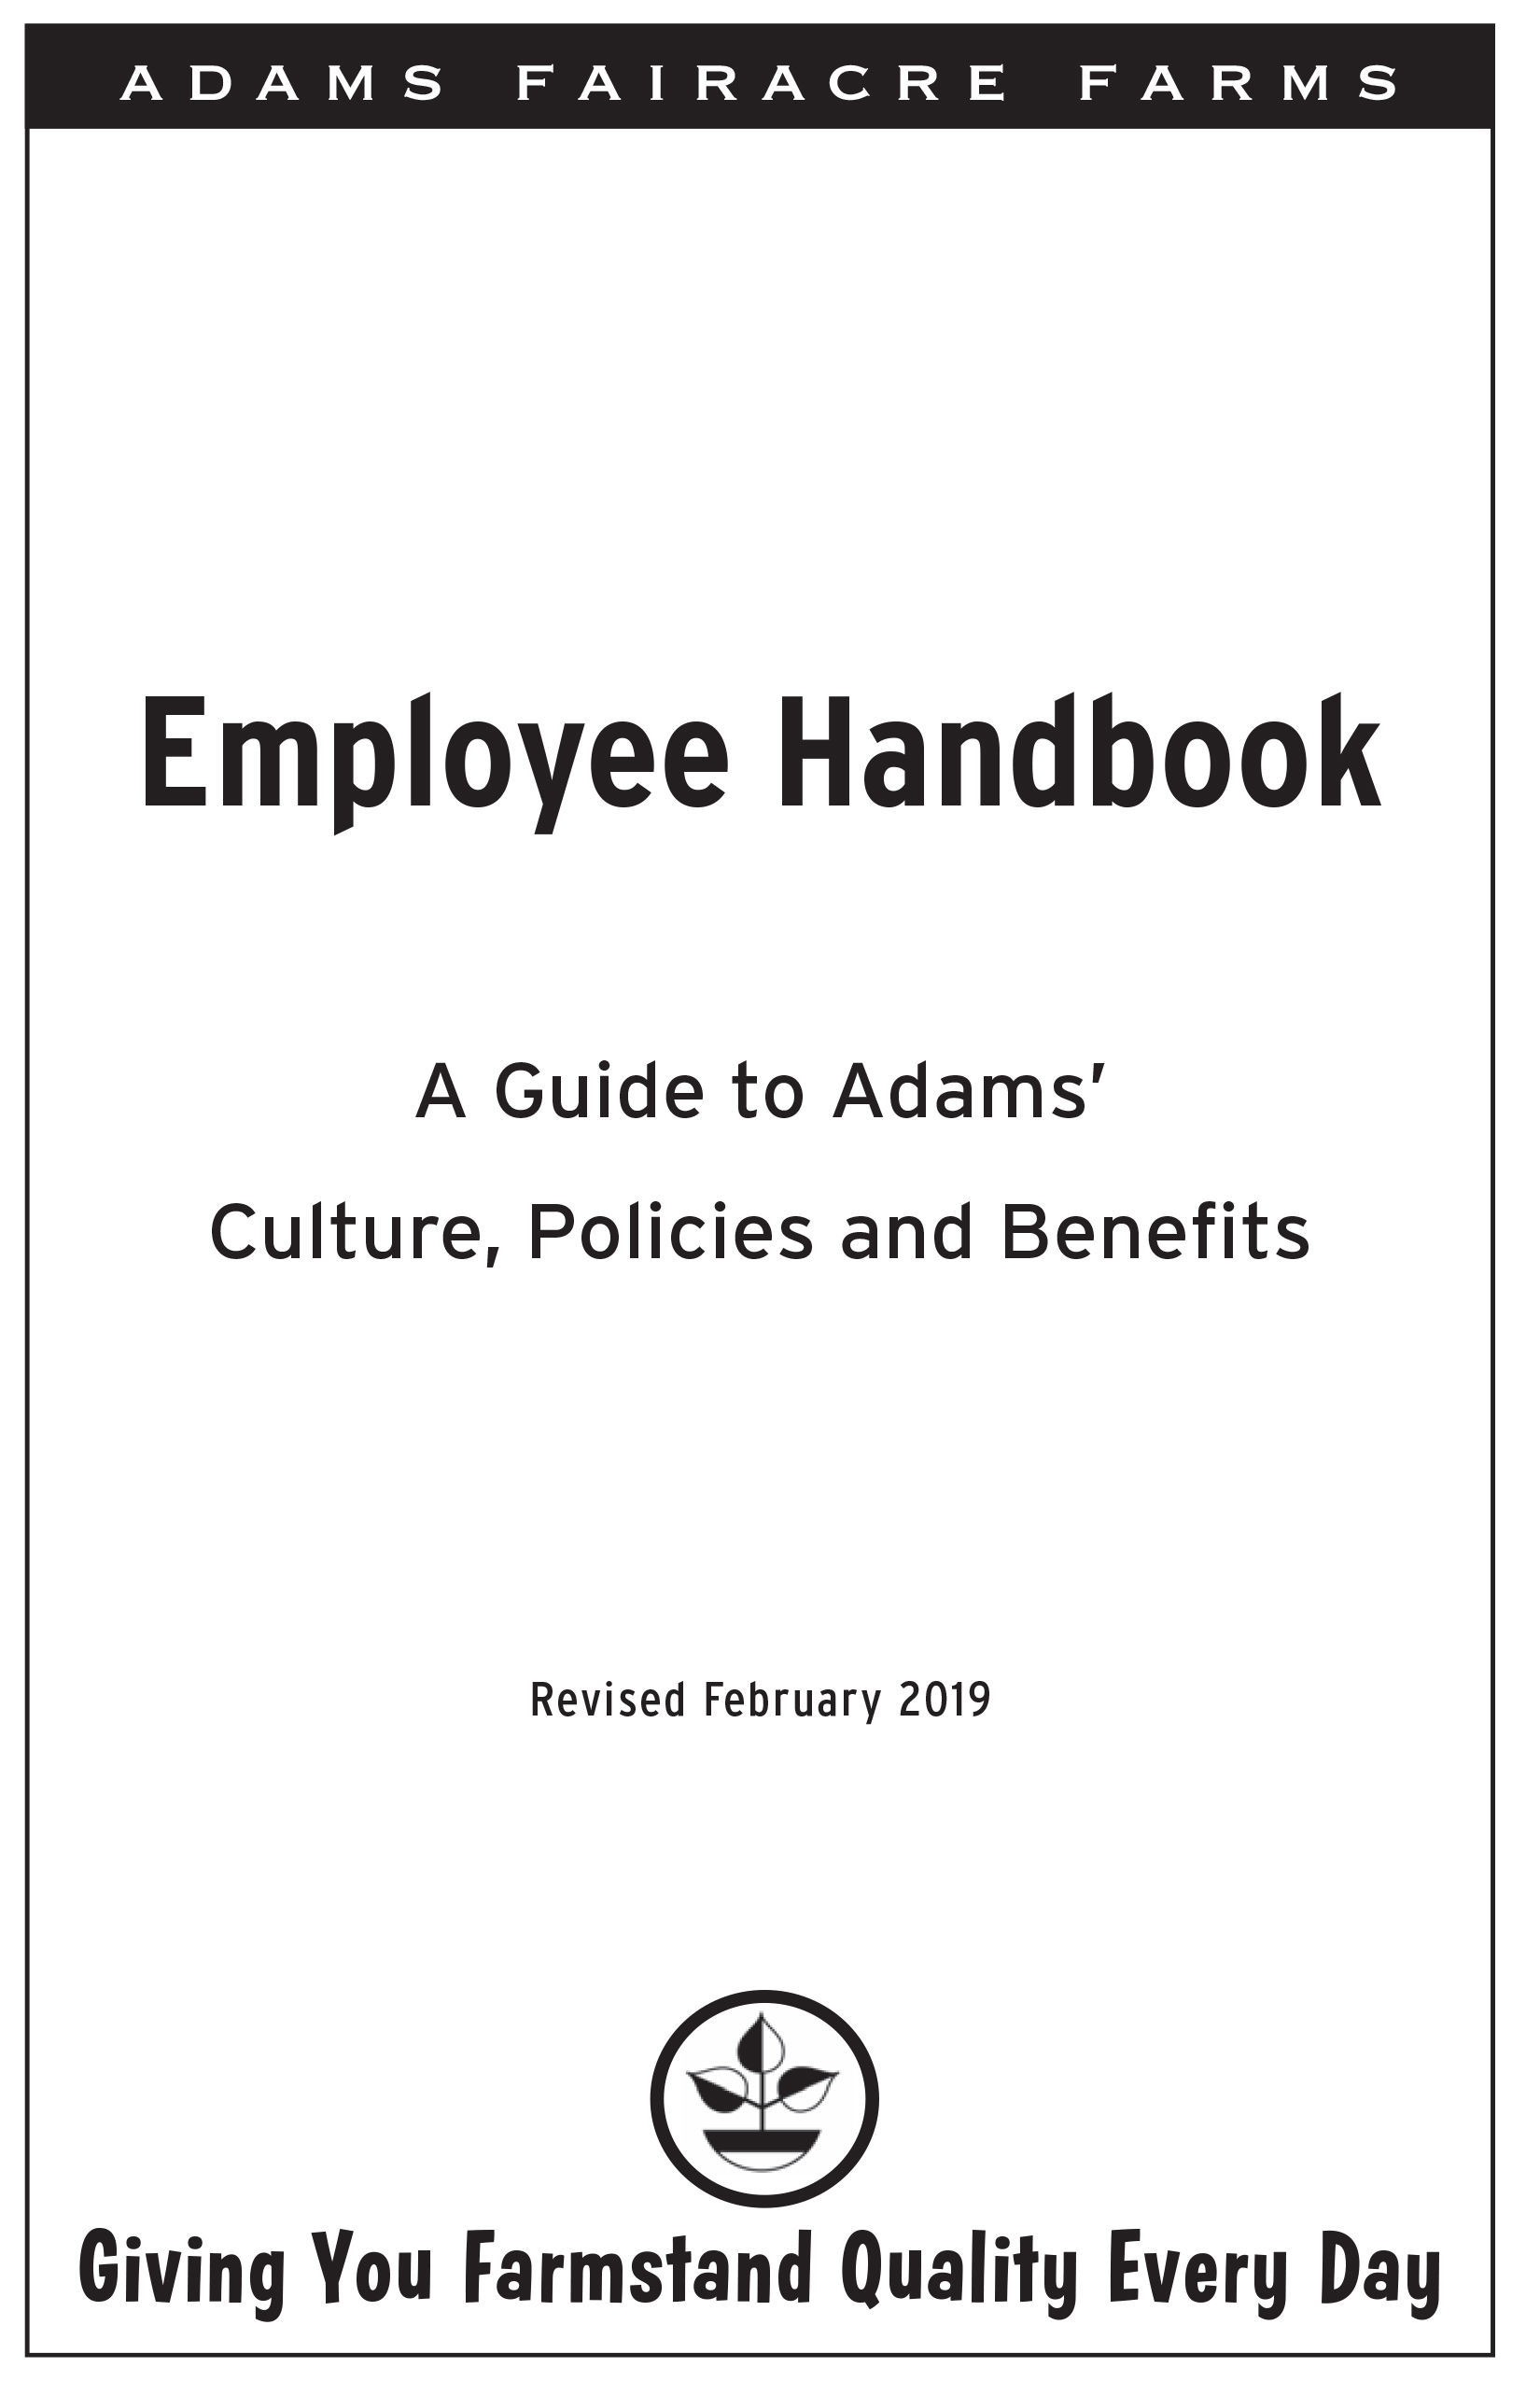 Employee handbook1